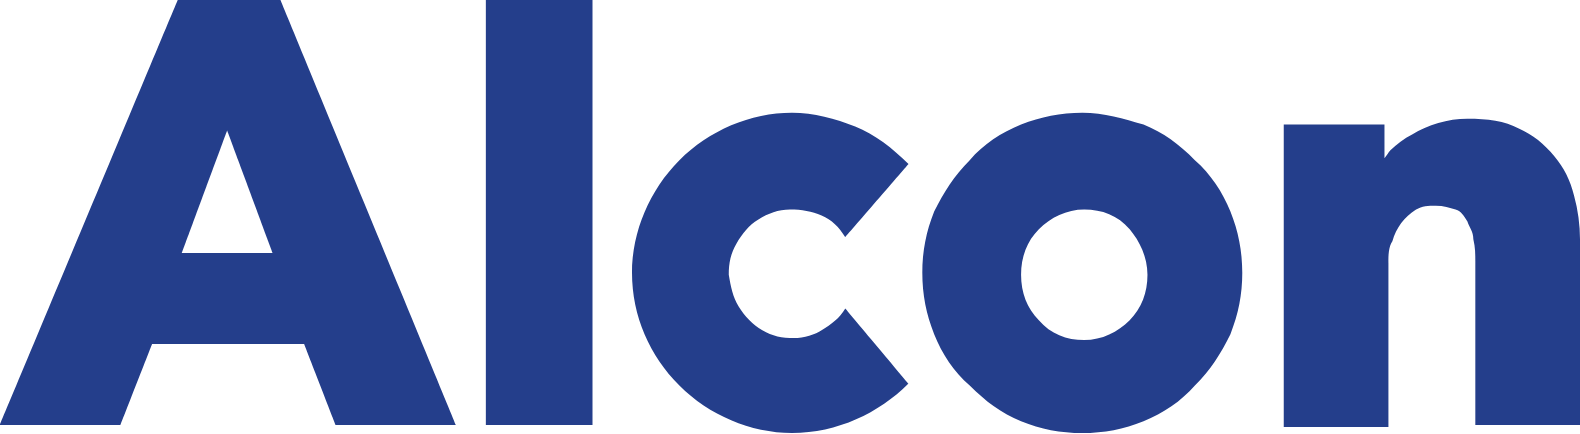 Alcon logo large (transparent PNG)